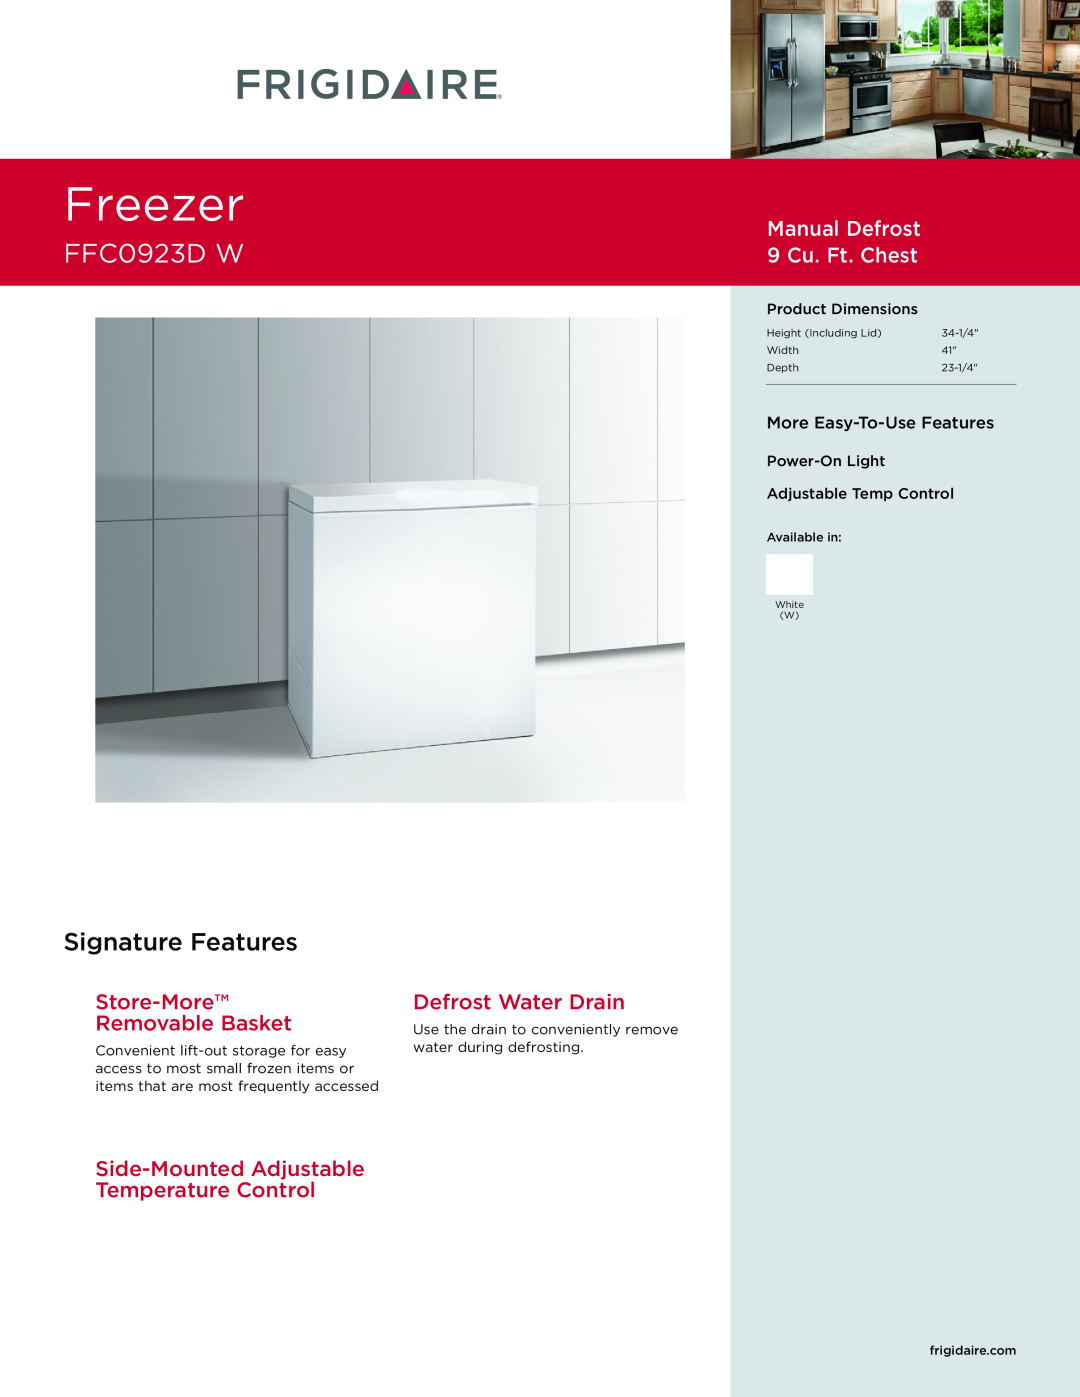 Frigidaire FFC0923D W dimensions Freezer, Signature Features, Manual Defrost 9 Cu. Ft. Chest, Store-More Removable Basket 